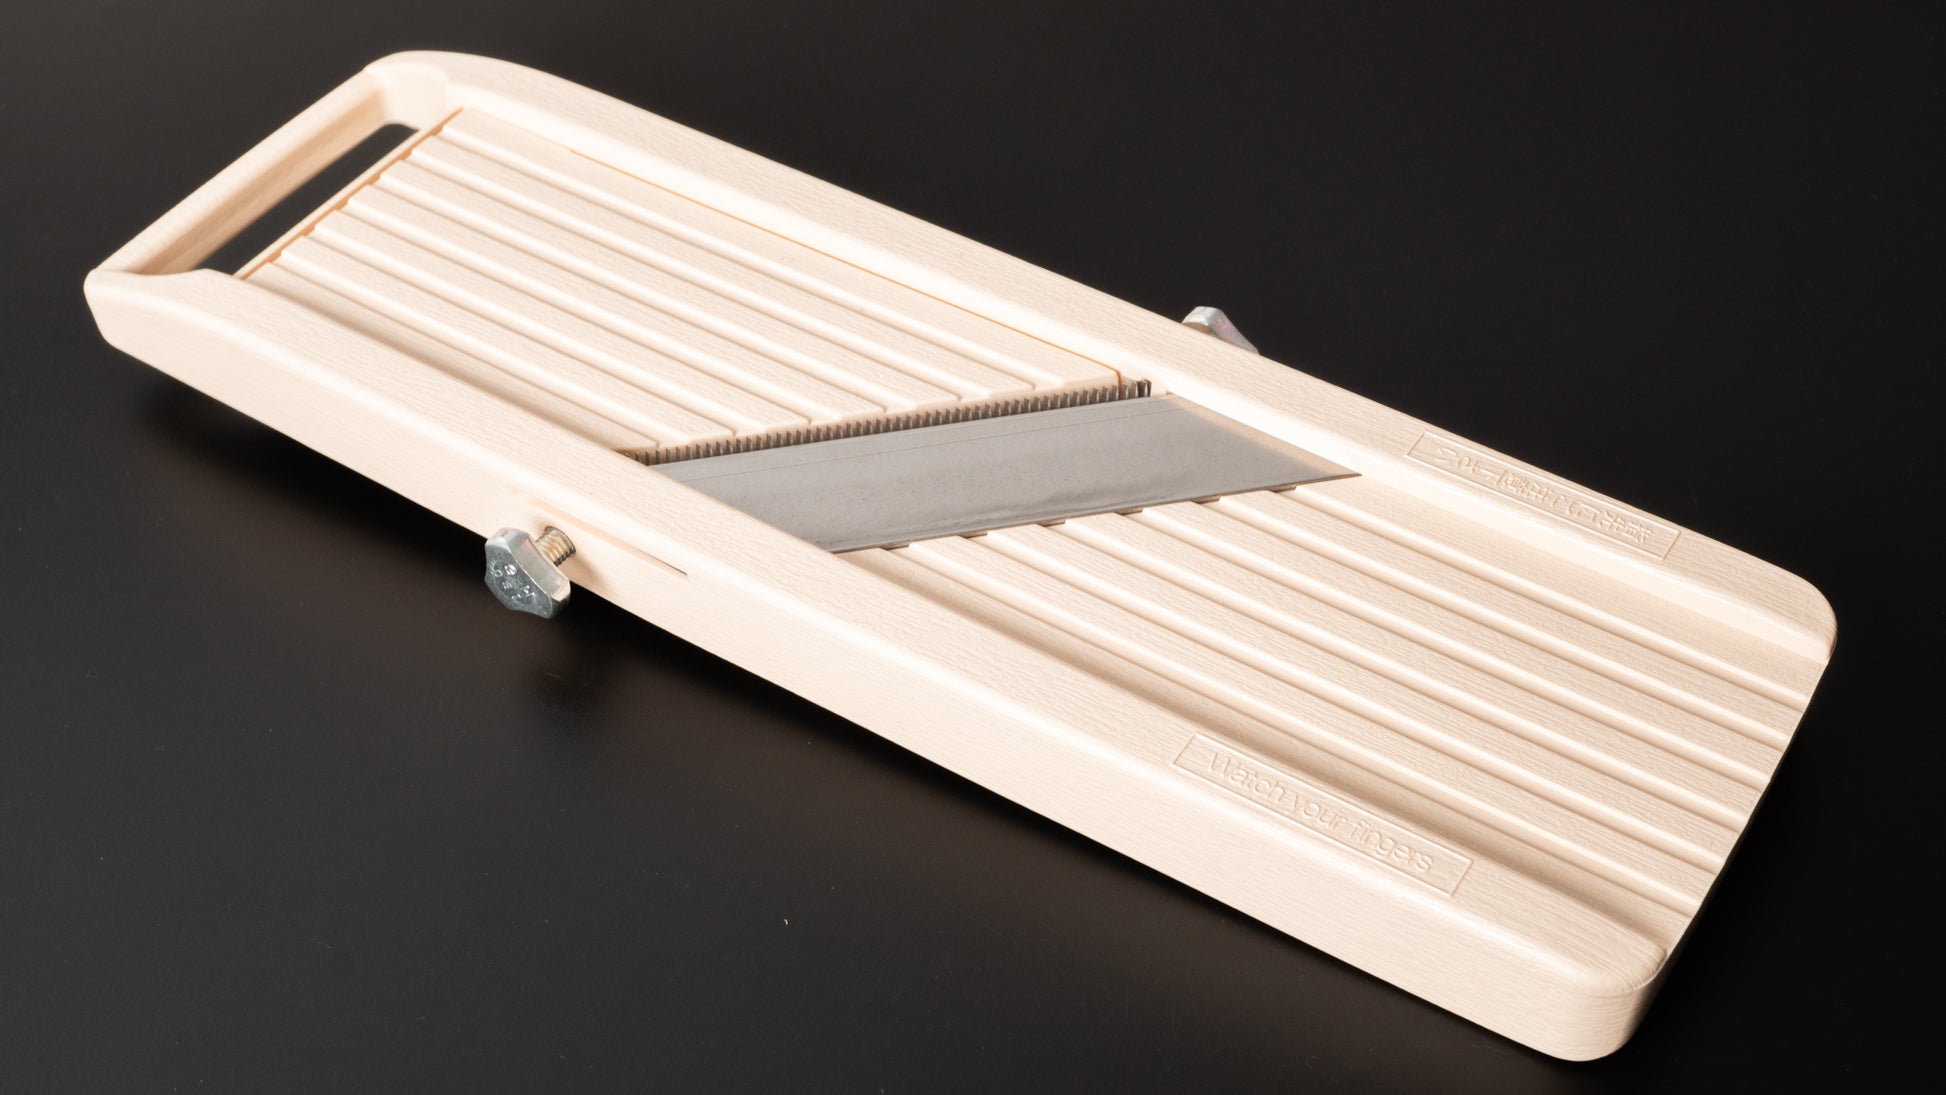 Benriner Japanese Mandoline Slicer - Whisk